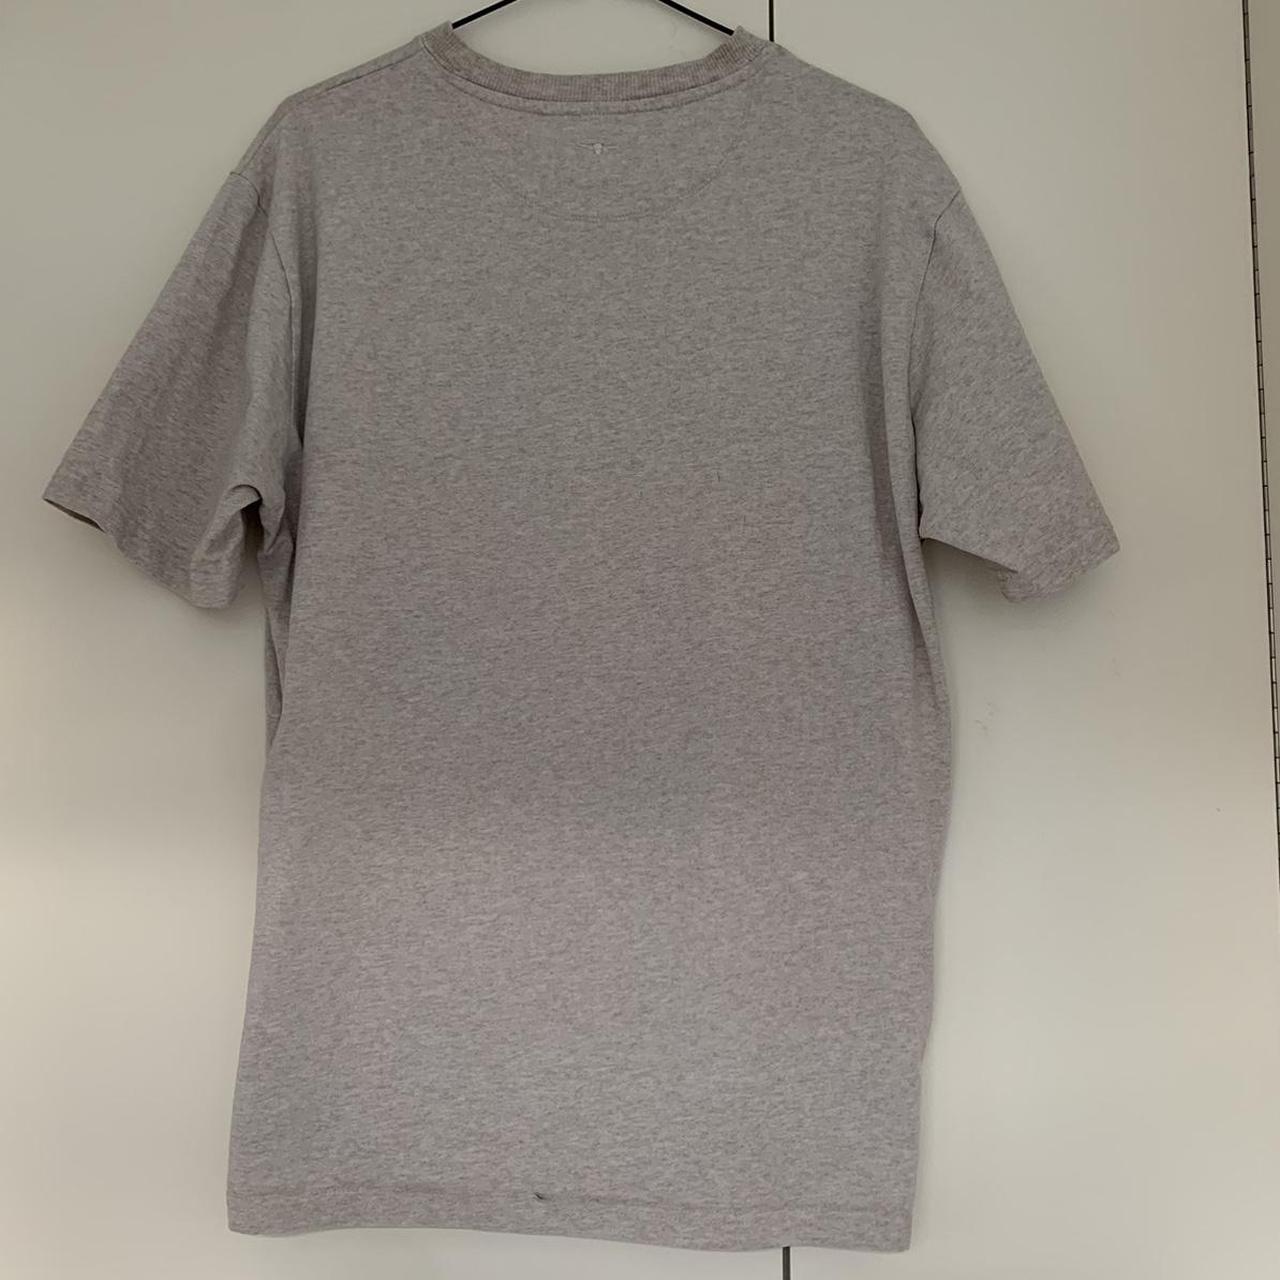 RM Williams T Shirt. Colour: Grey with black print... - Depop